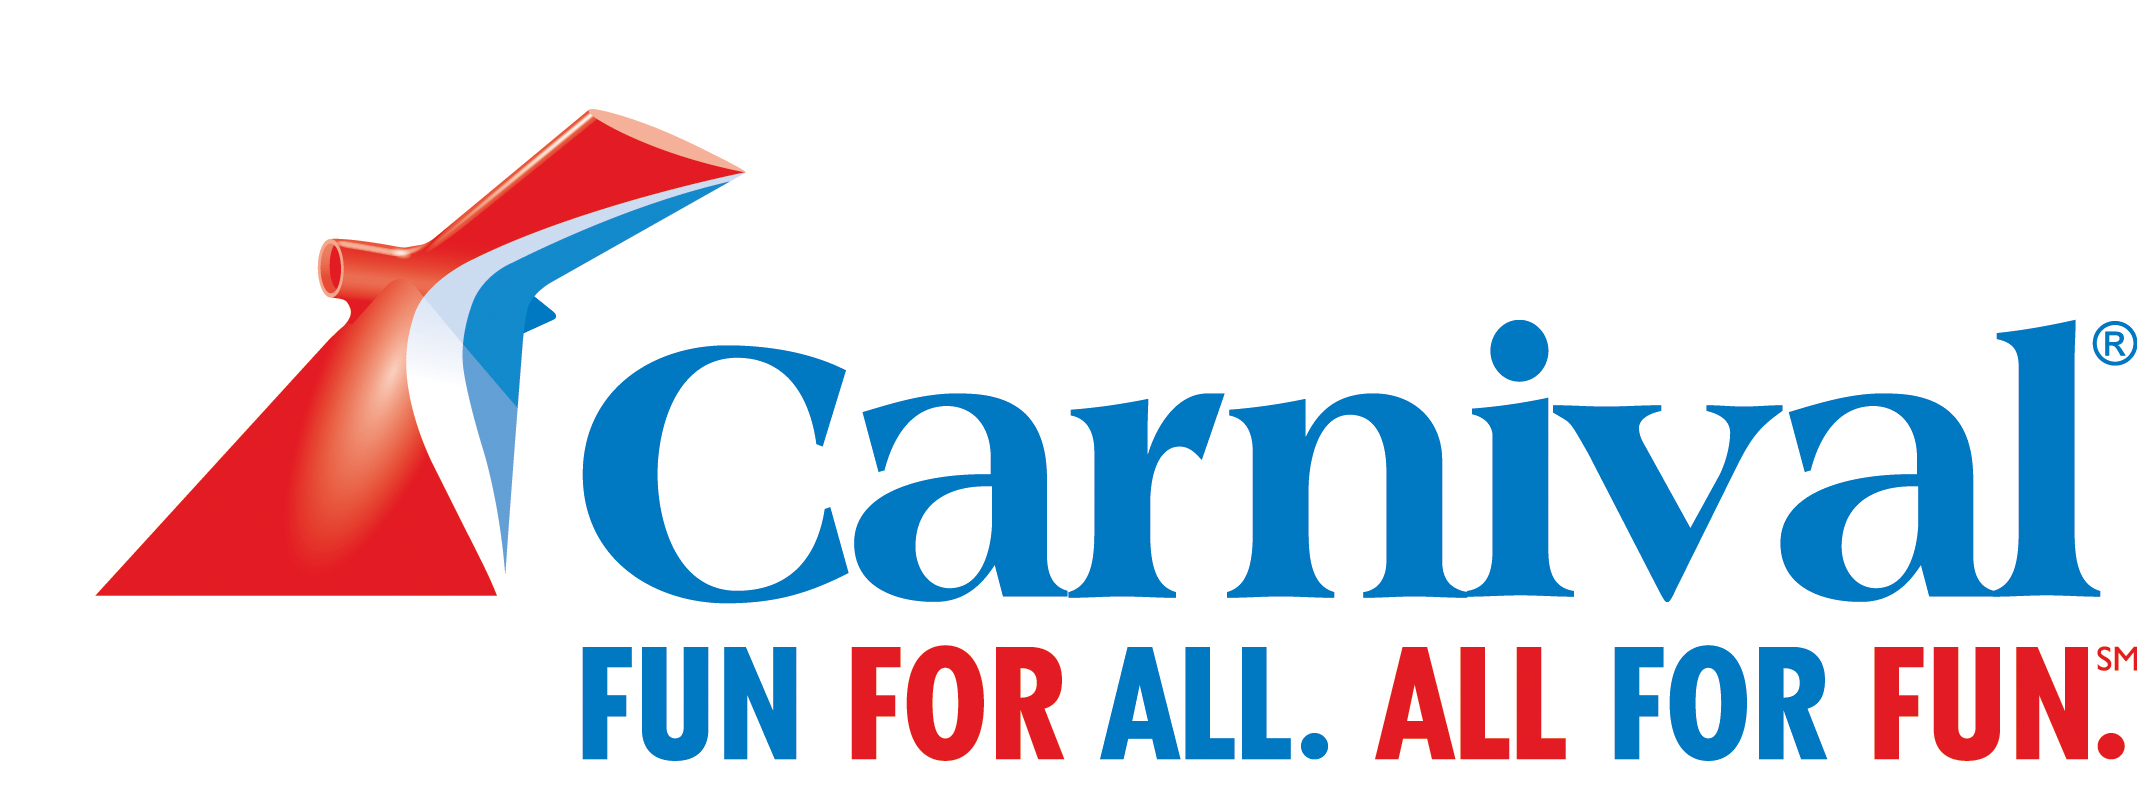 carnival logo png